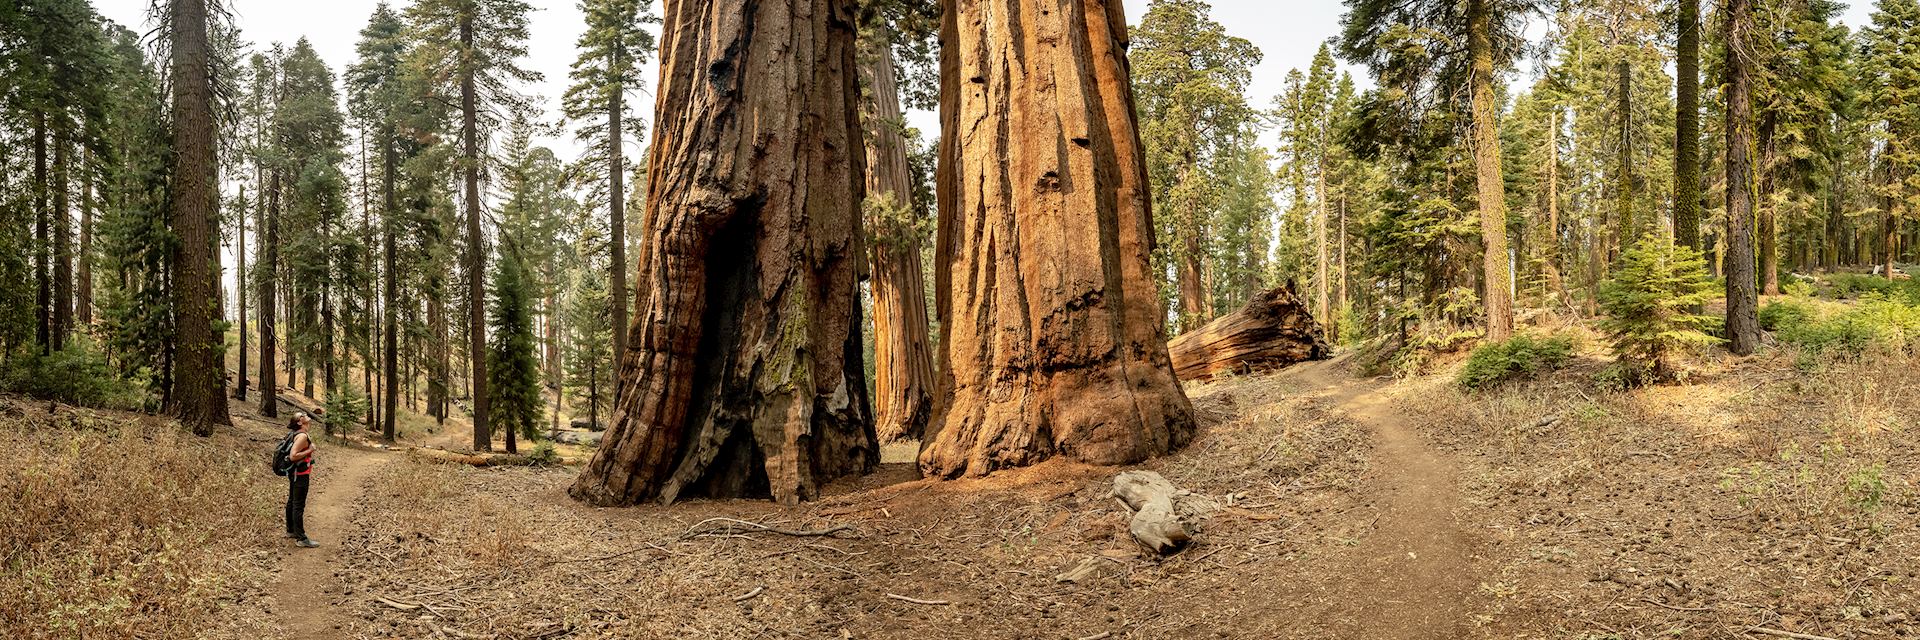 Sequoia trees, Mariposa Grove